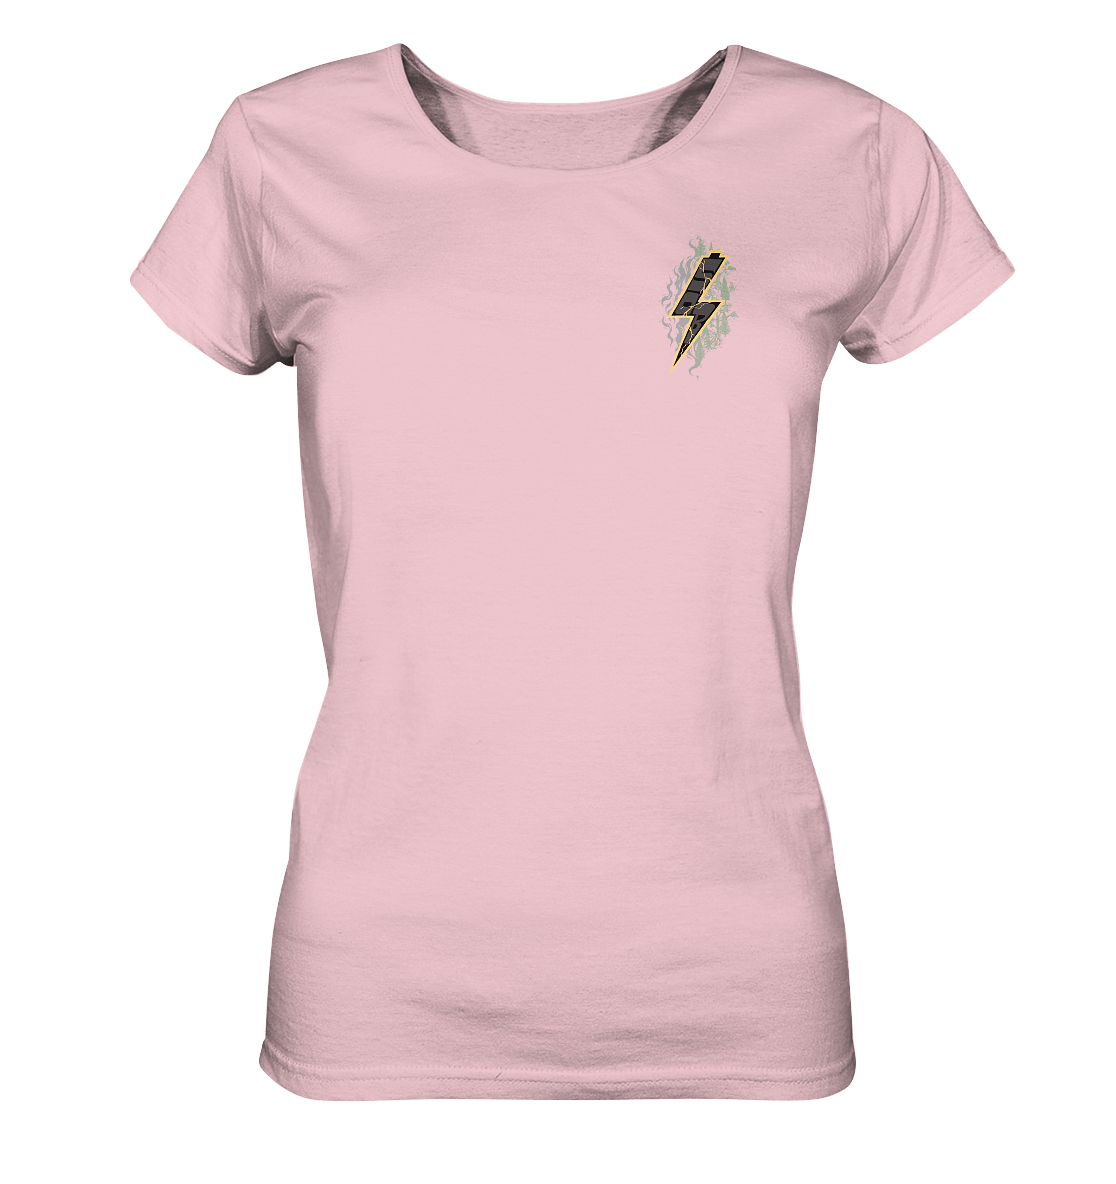 Sons of Battery® - E-MTB Brand & Community Lady-Shirts Cotton Pink / S SoB - Shred or Alive - Ladies Organic Shirt E-Bike-Community